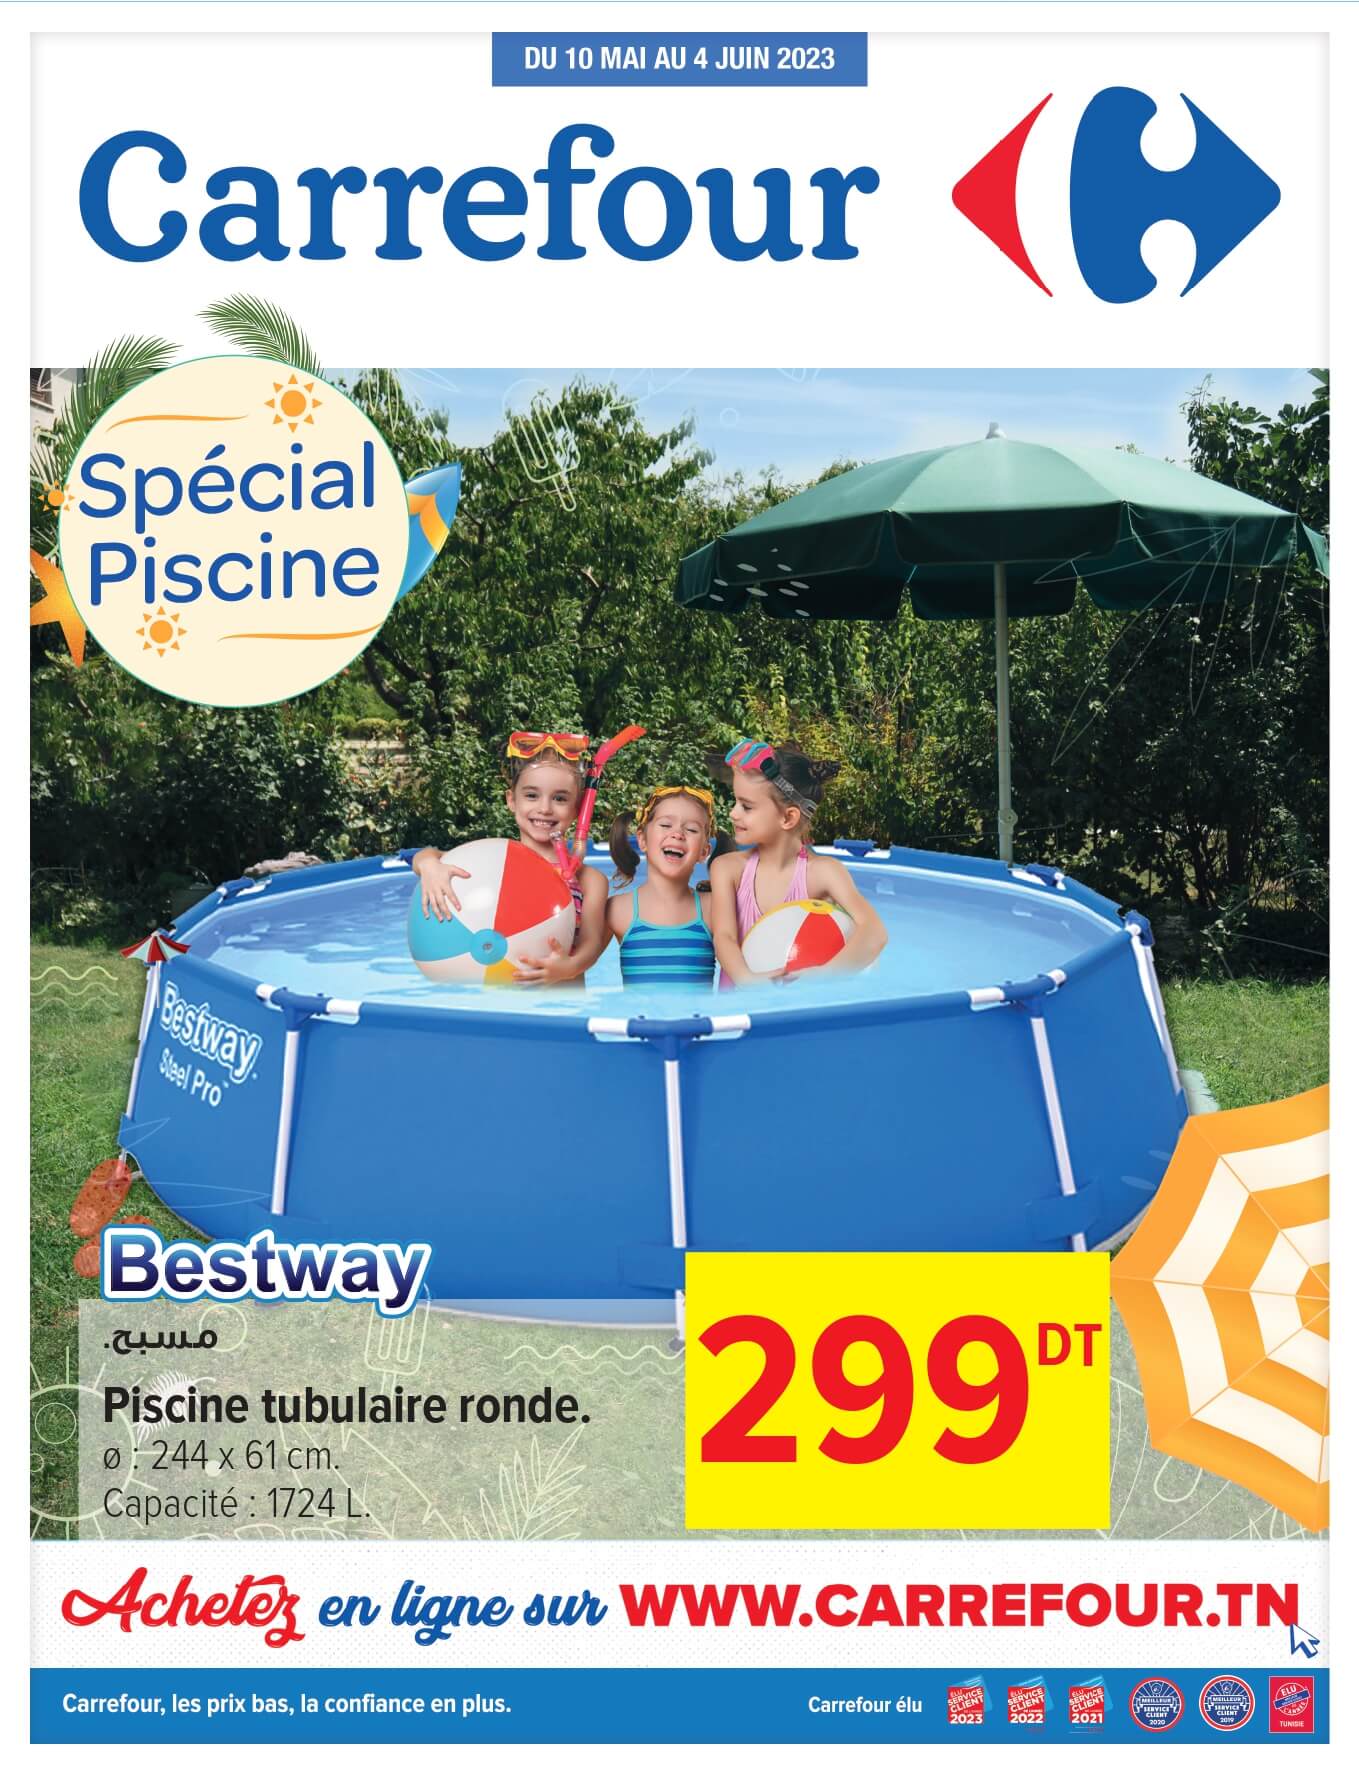 carrefour-special-piscine